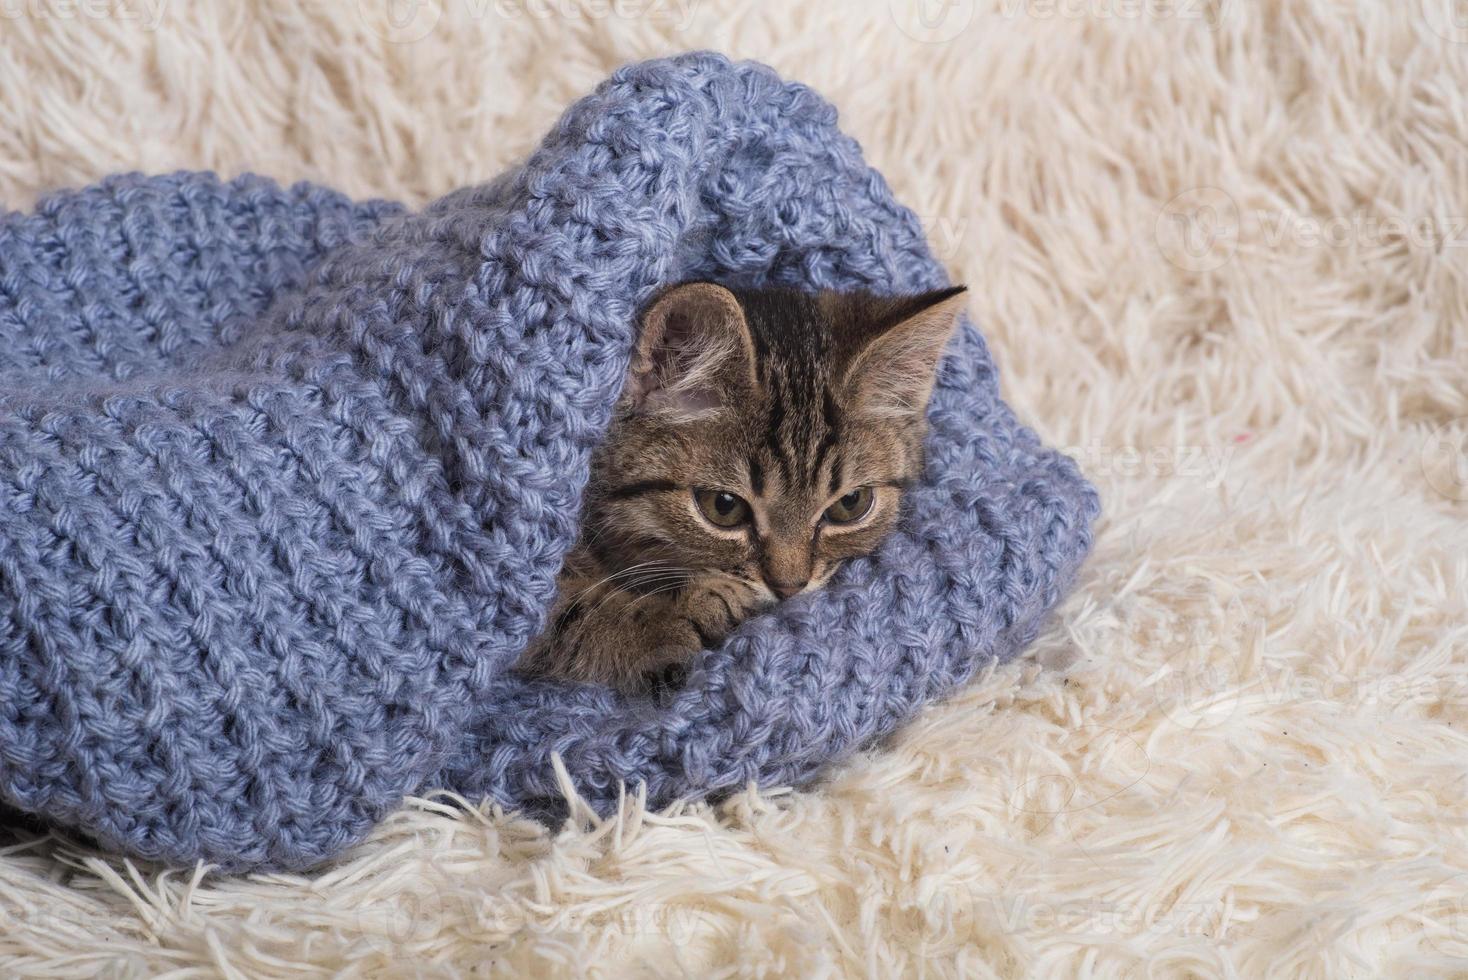 A small, cute, funny kitten on a white fluffy blanket. Kitten sleeps in a blue knitted sweater. Kitten in a cozy atmosphere photo